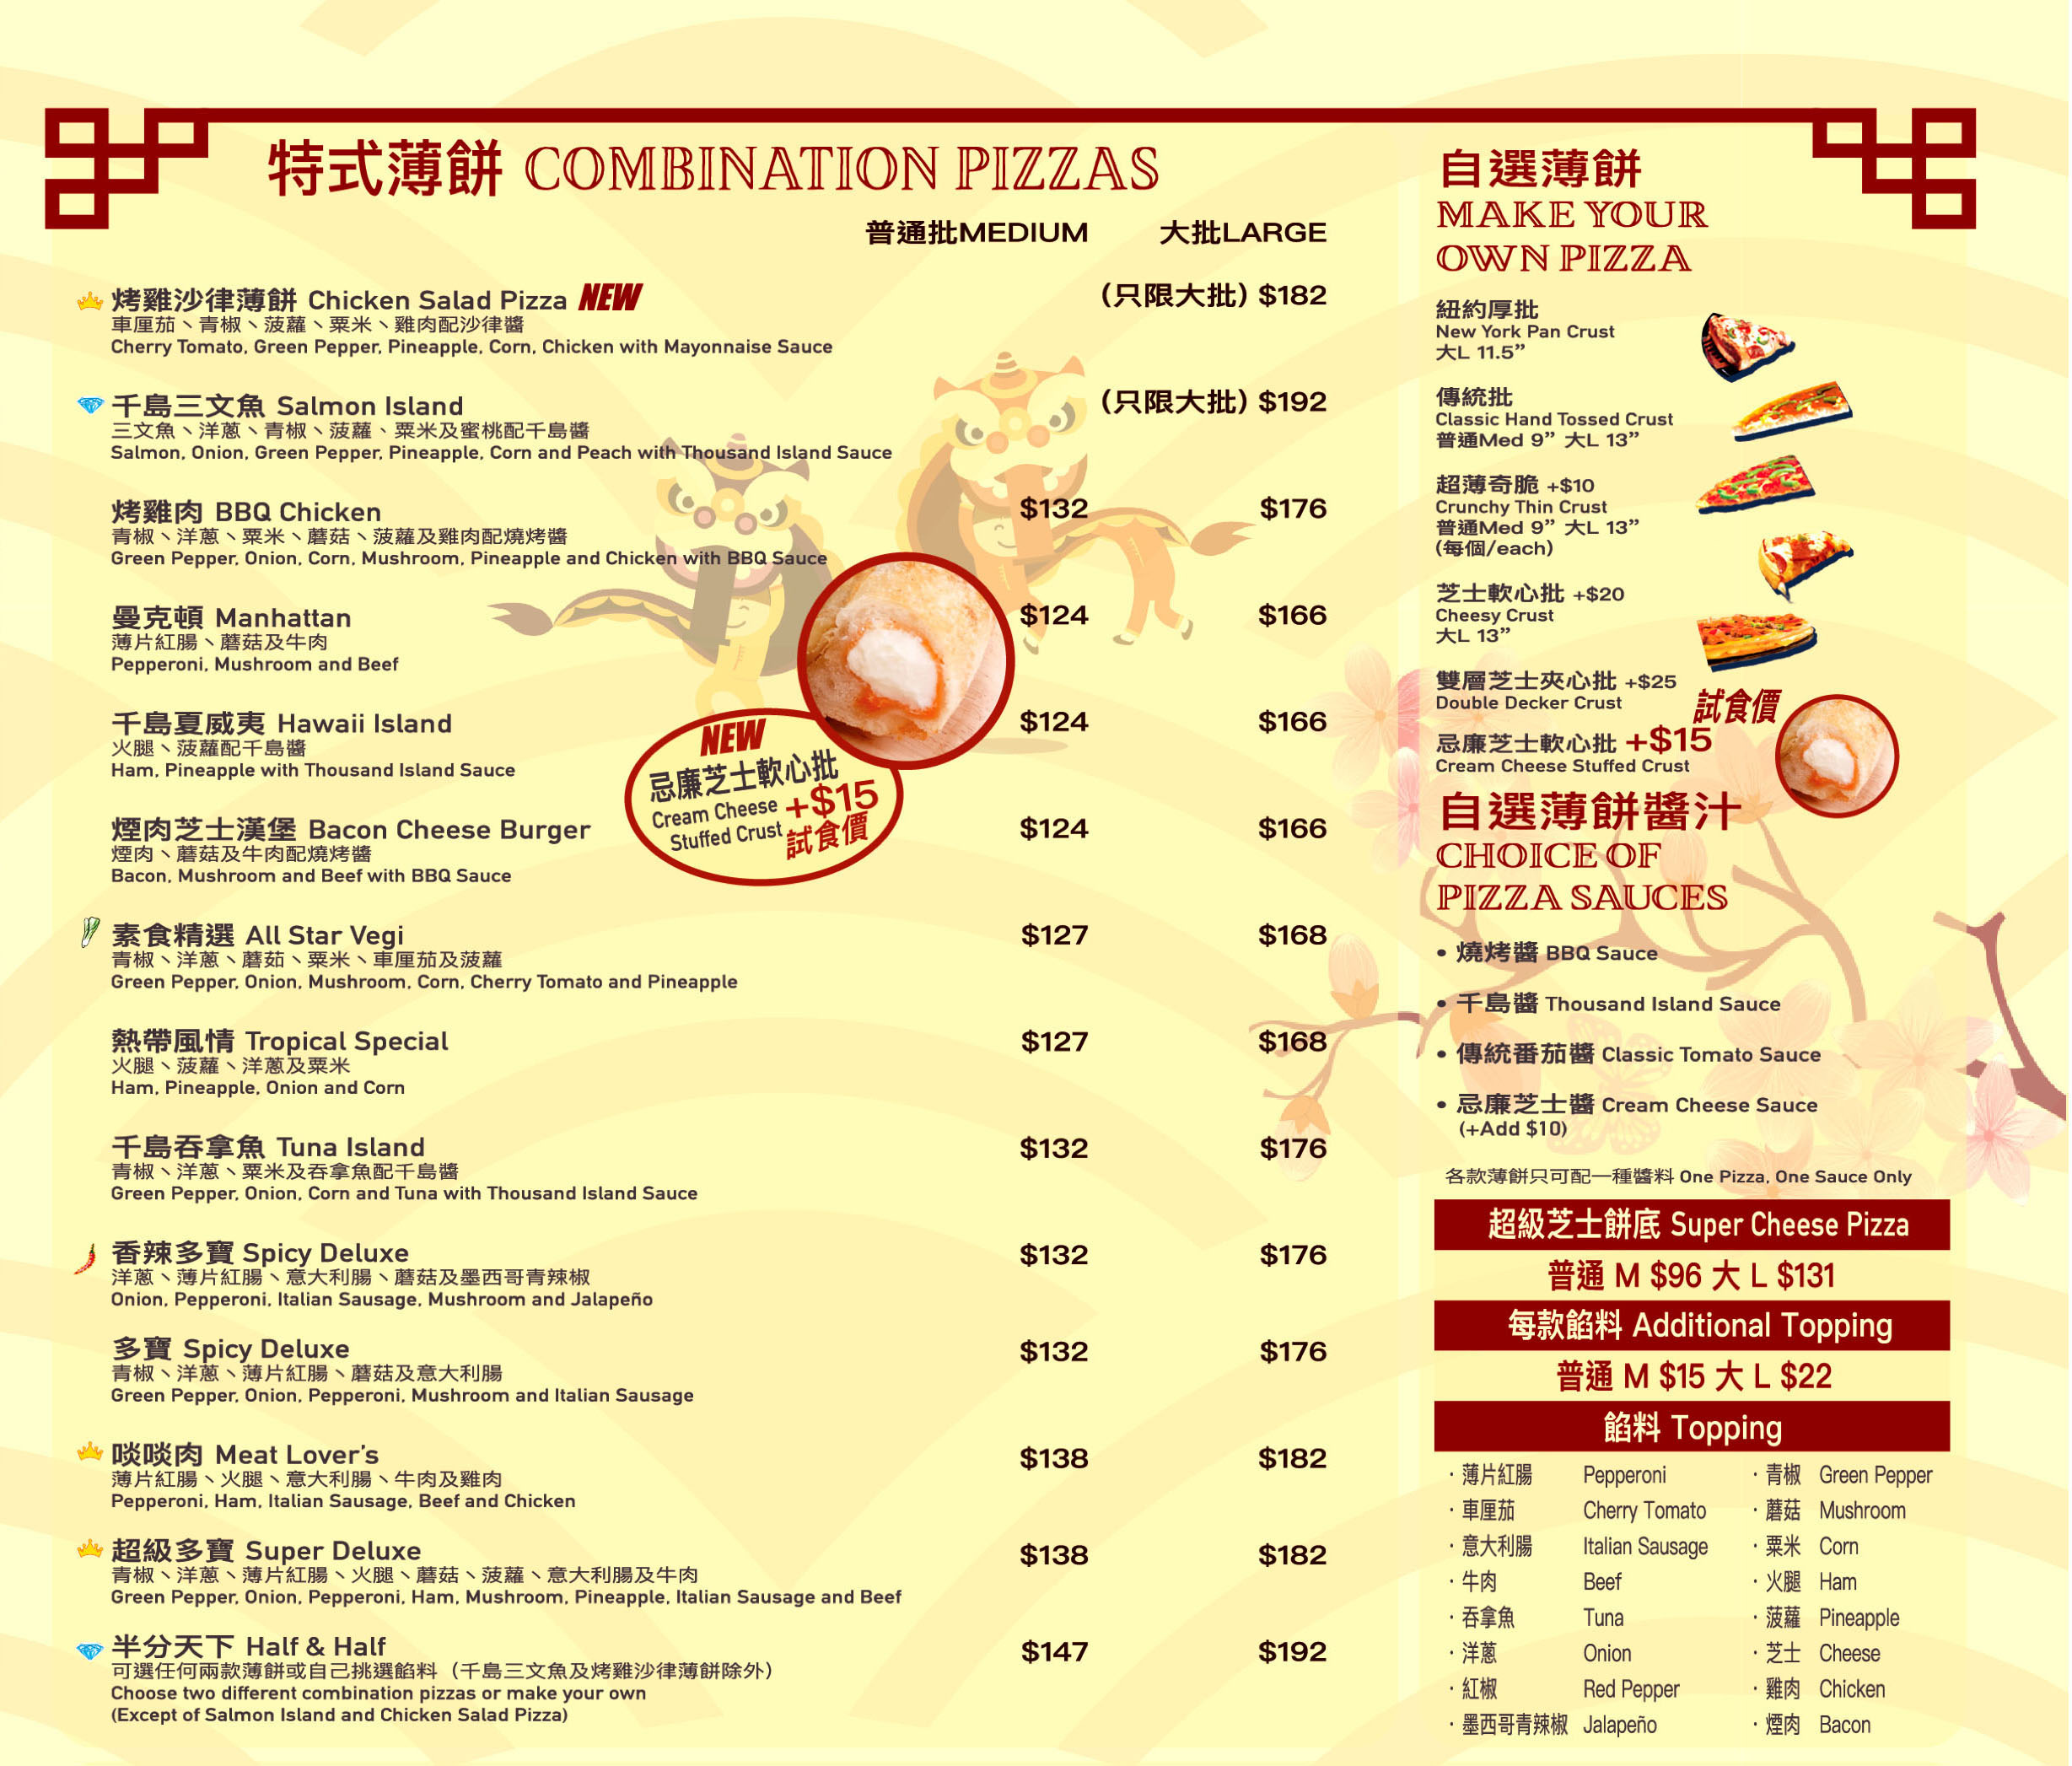 pizza box 香港外賣薄餅速遞服務 hong kong pizza box delivery menu price package 特價錢美食外賣紙餐劵餐單價目表優惠價格餐牌